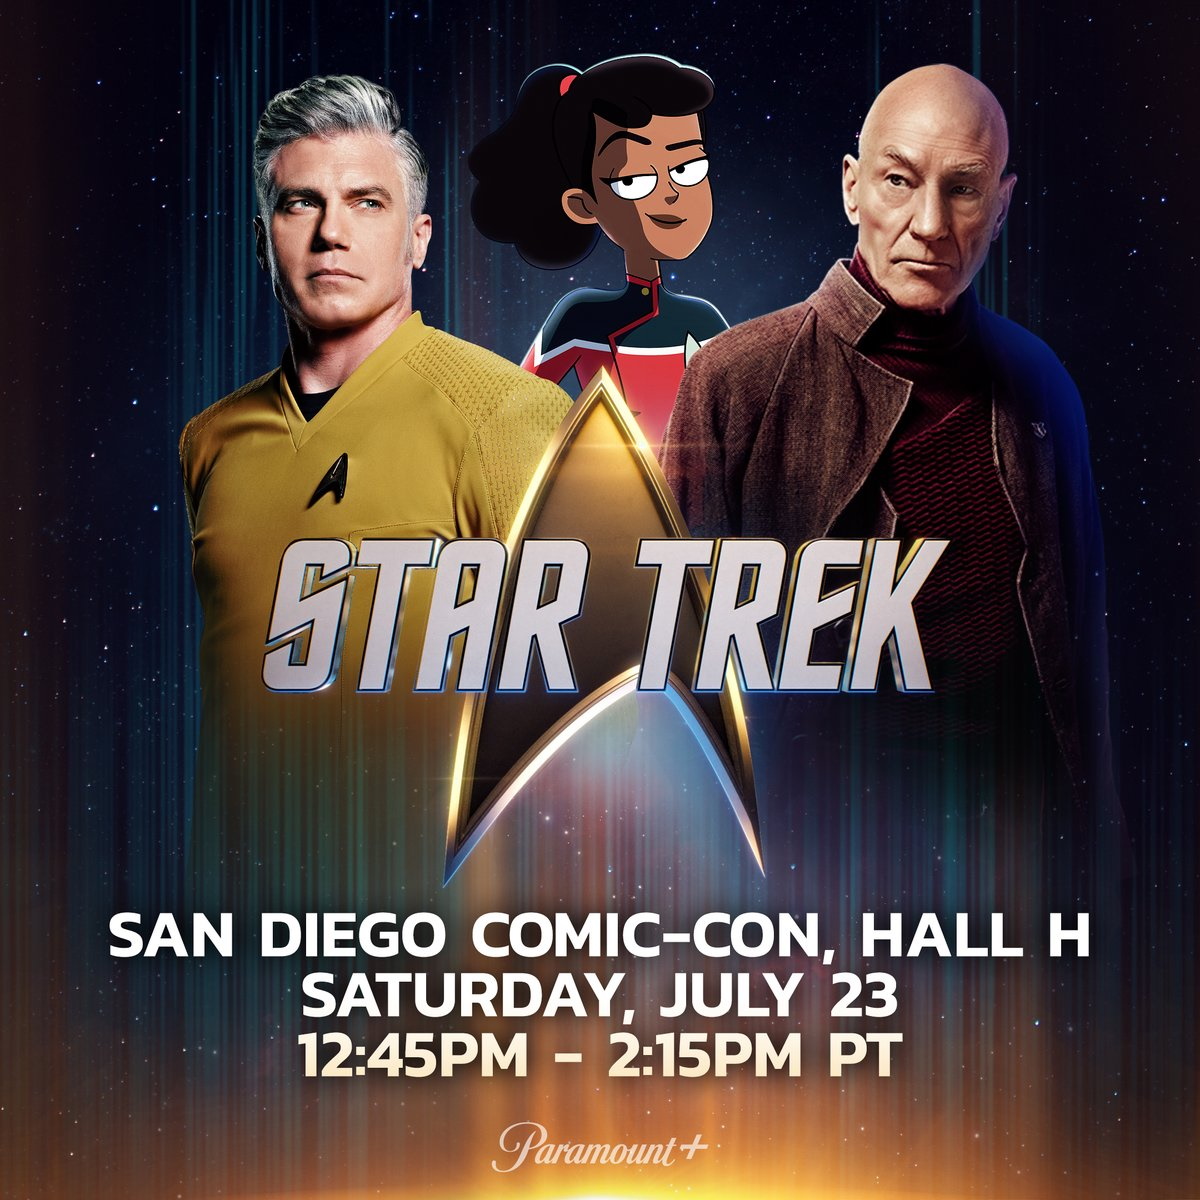 Paramount+ Bringing Star Trek Back To Comic-Con With Hall H Panel Promising  â€œReveals And Surprisesâ€ â€“ TrekMovie.com